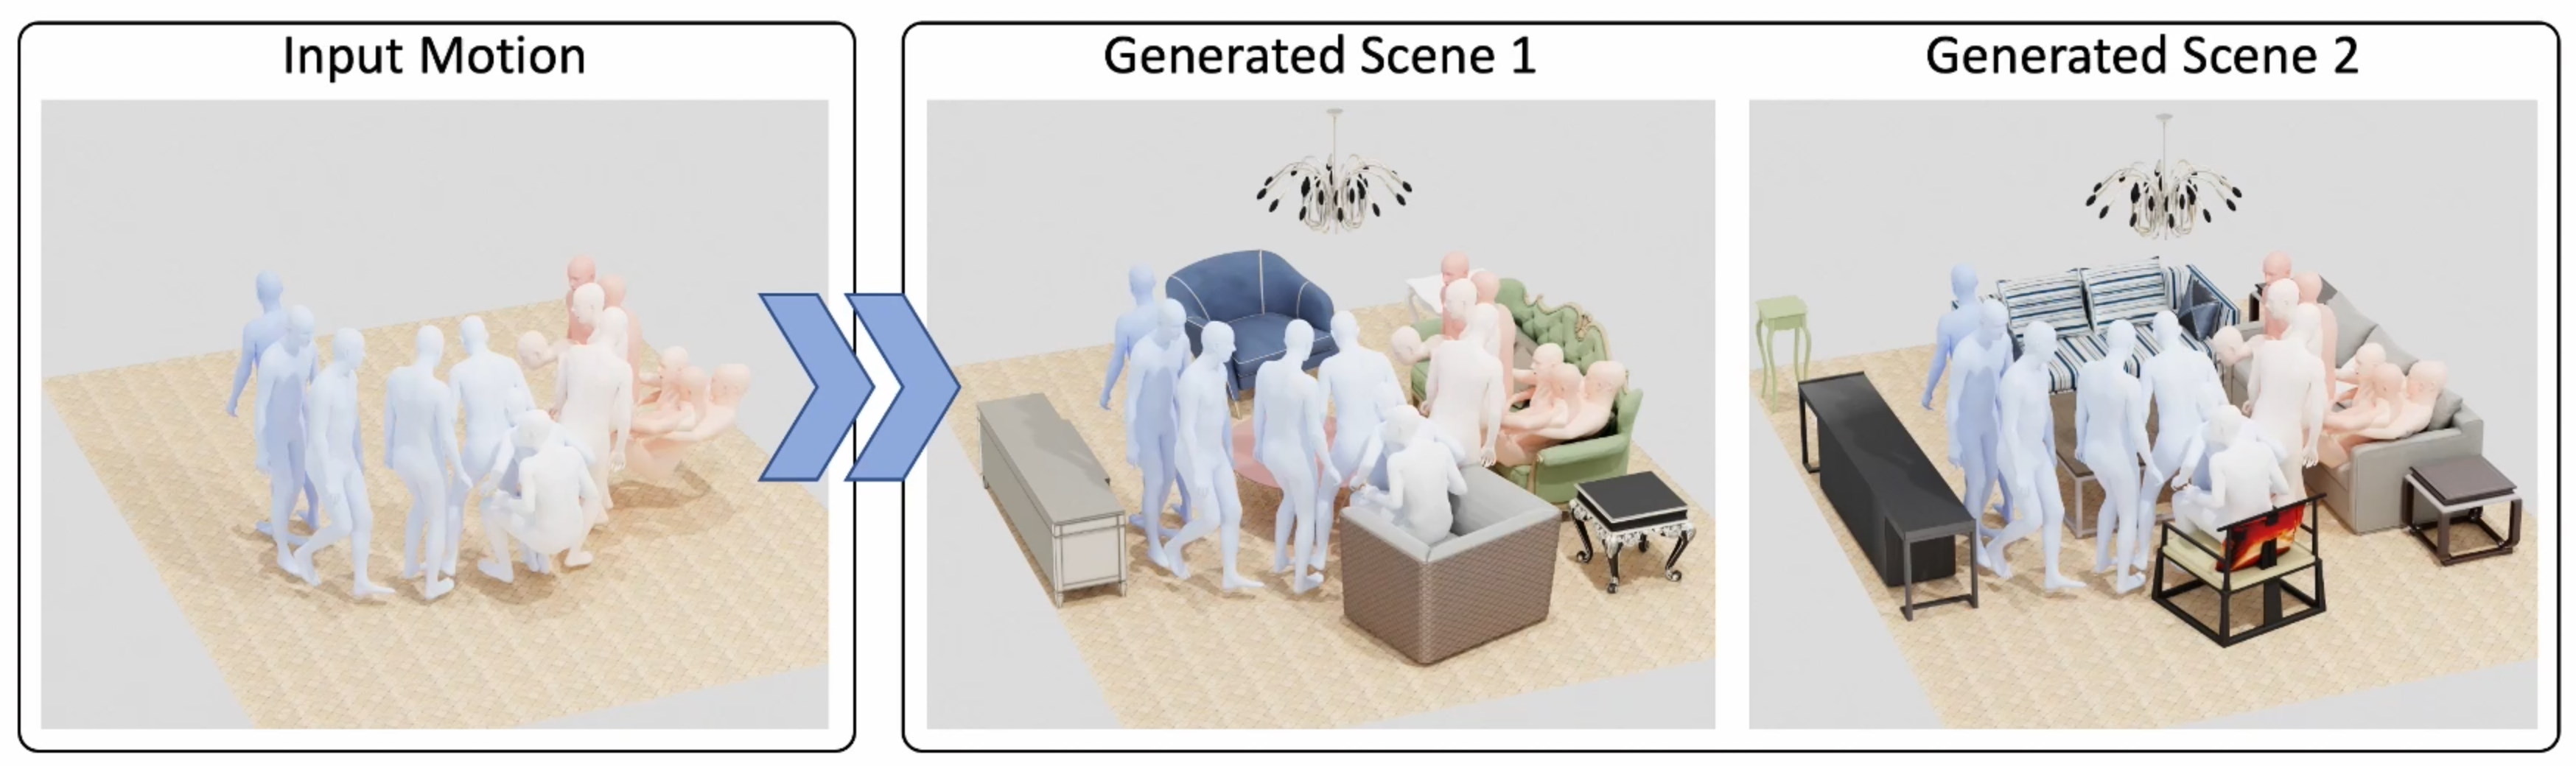 Human-Aware 3D Scene Generation